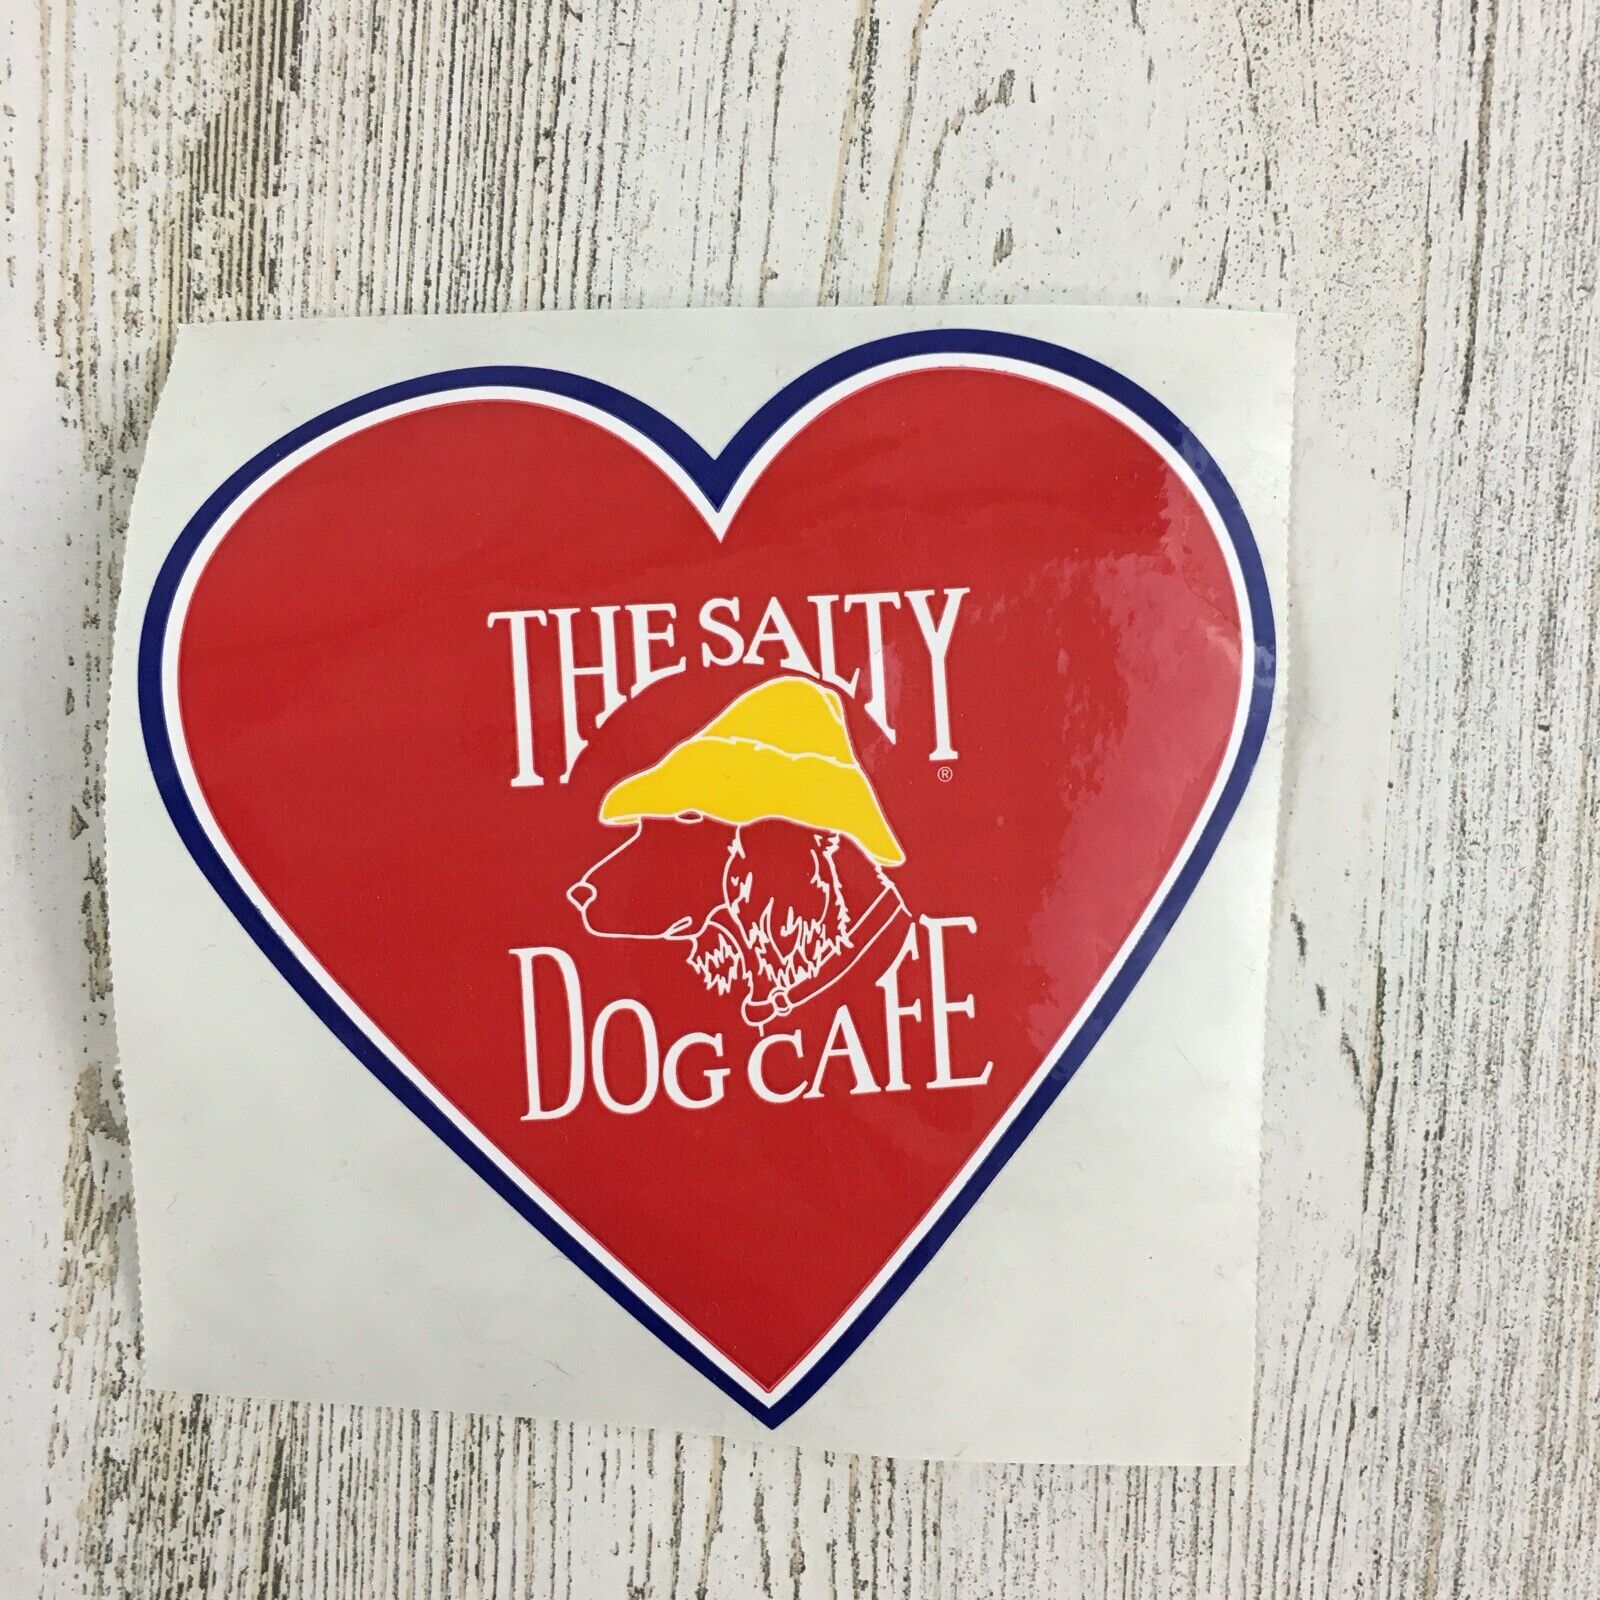 The Salty Dog Cafe Sticker Hilton Head Island SC HHI